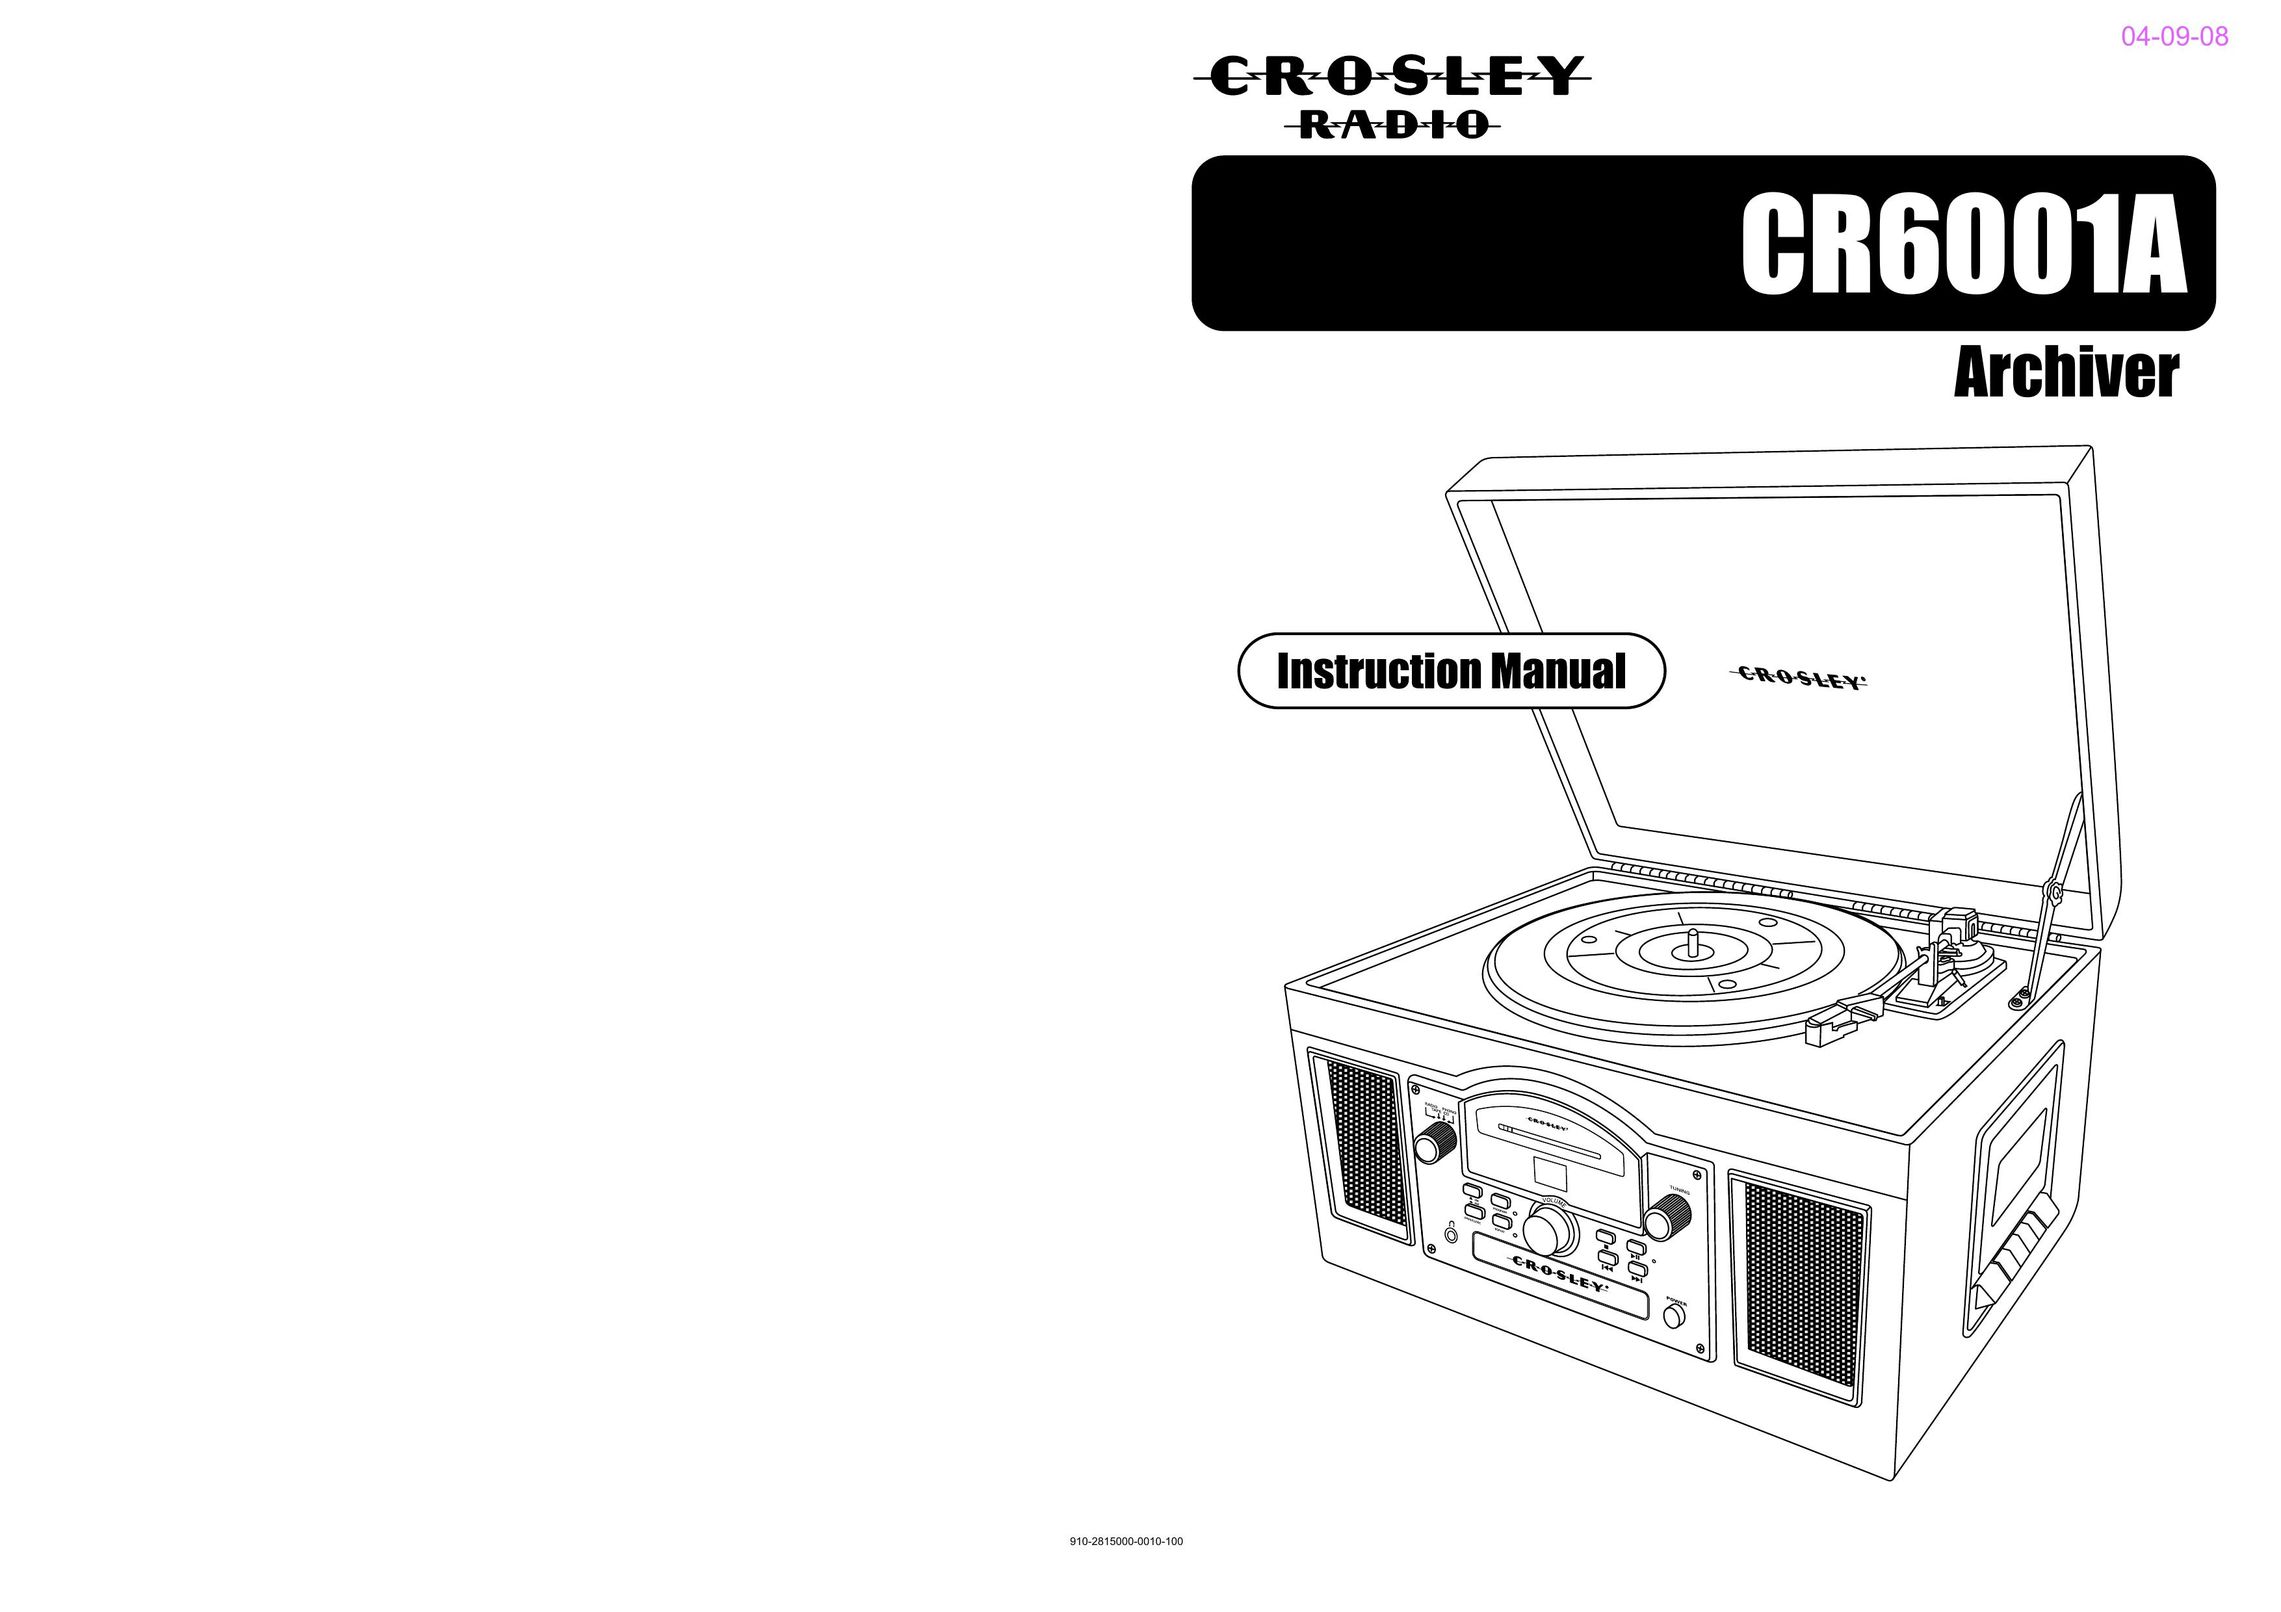 Crosley Radio CR0601A Turntable User Manual